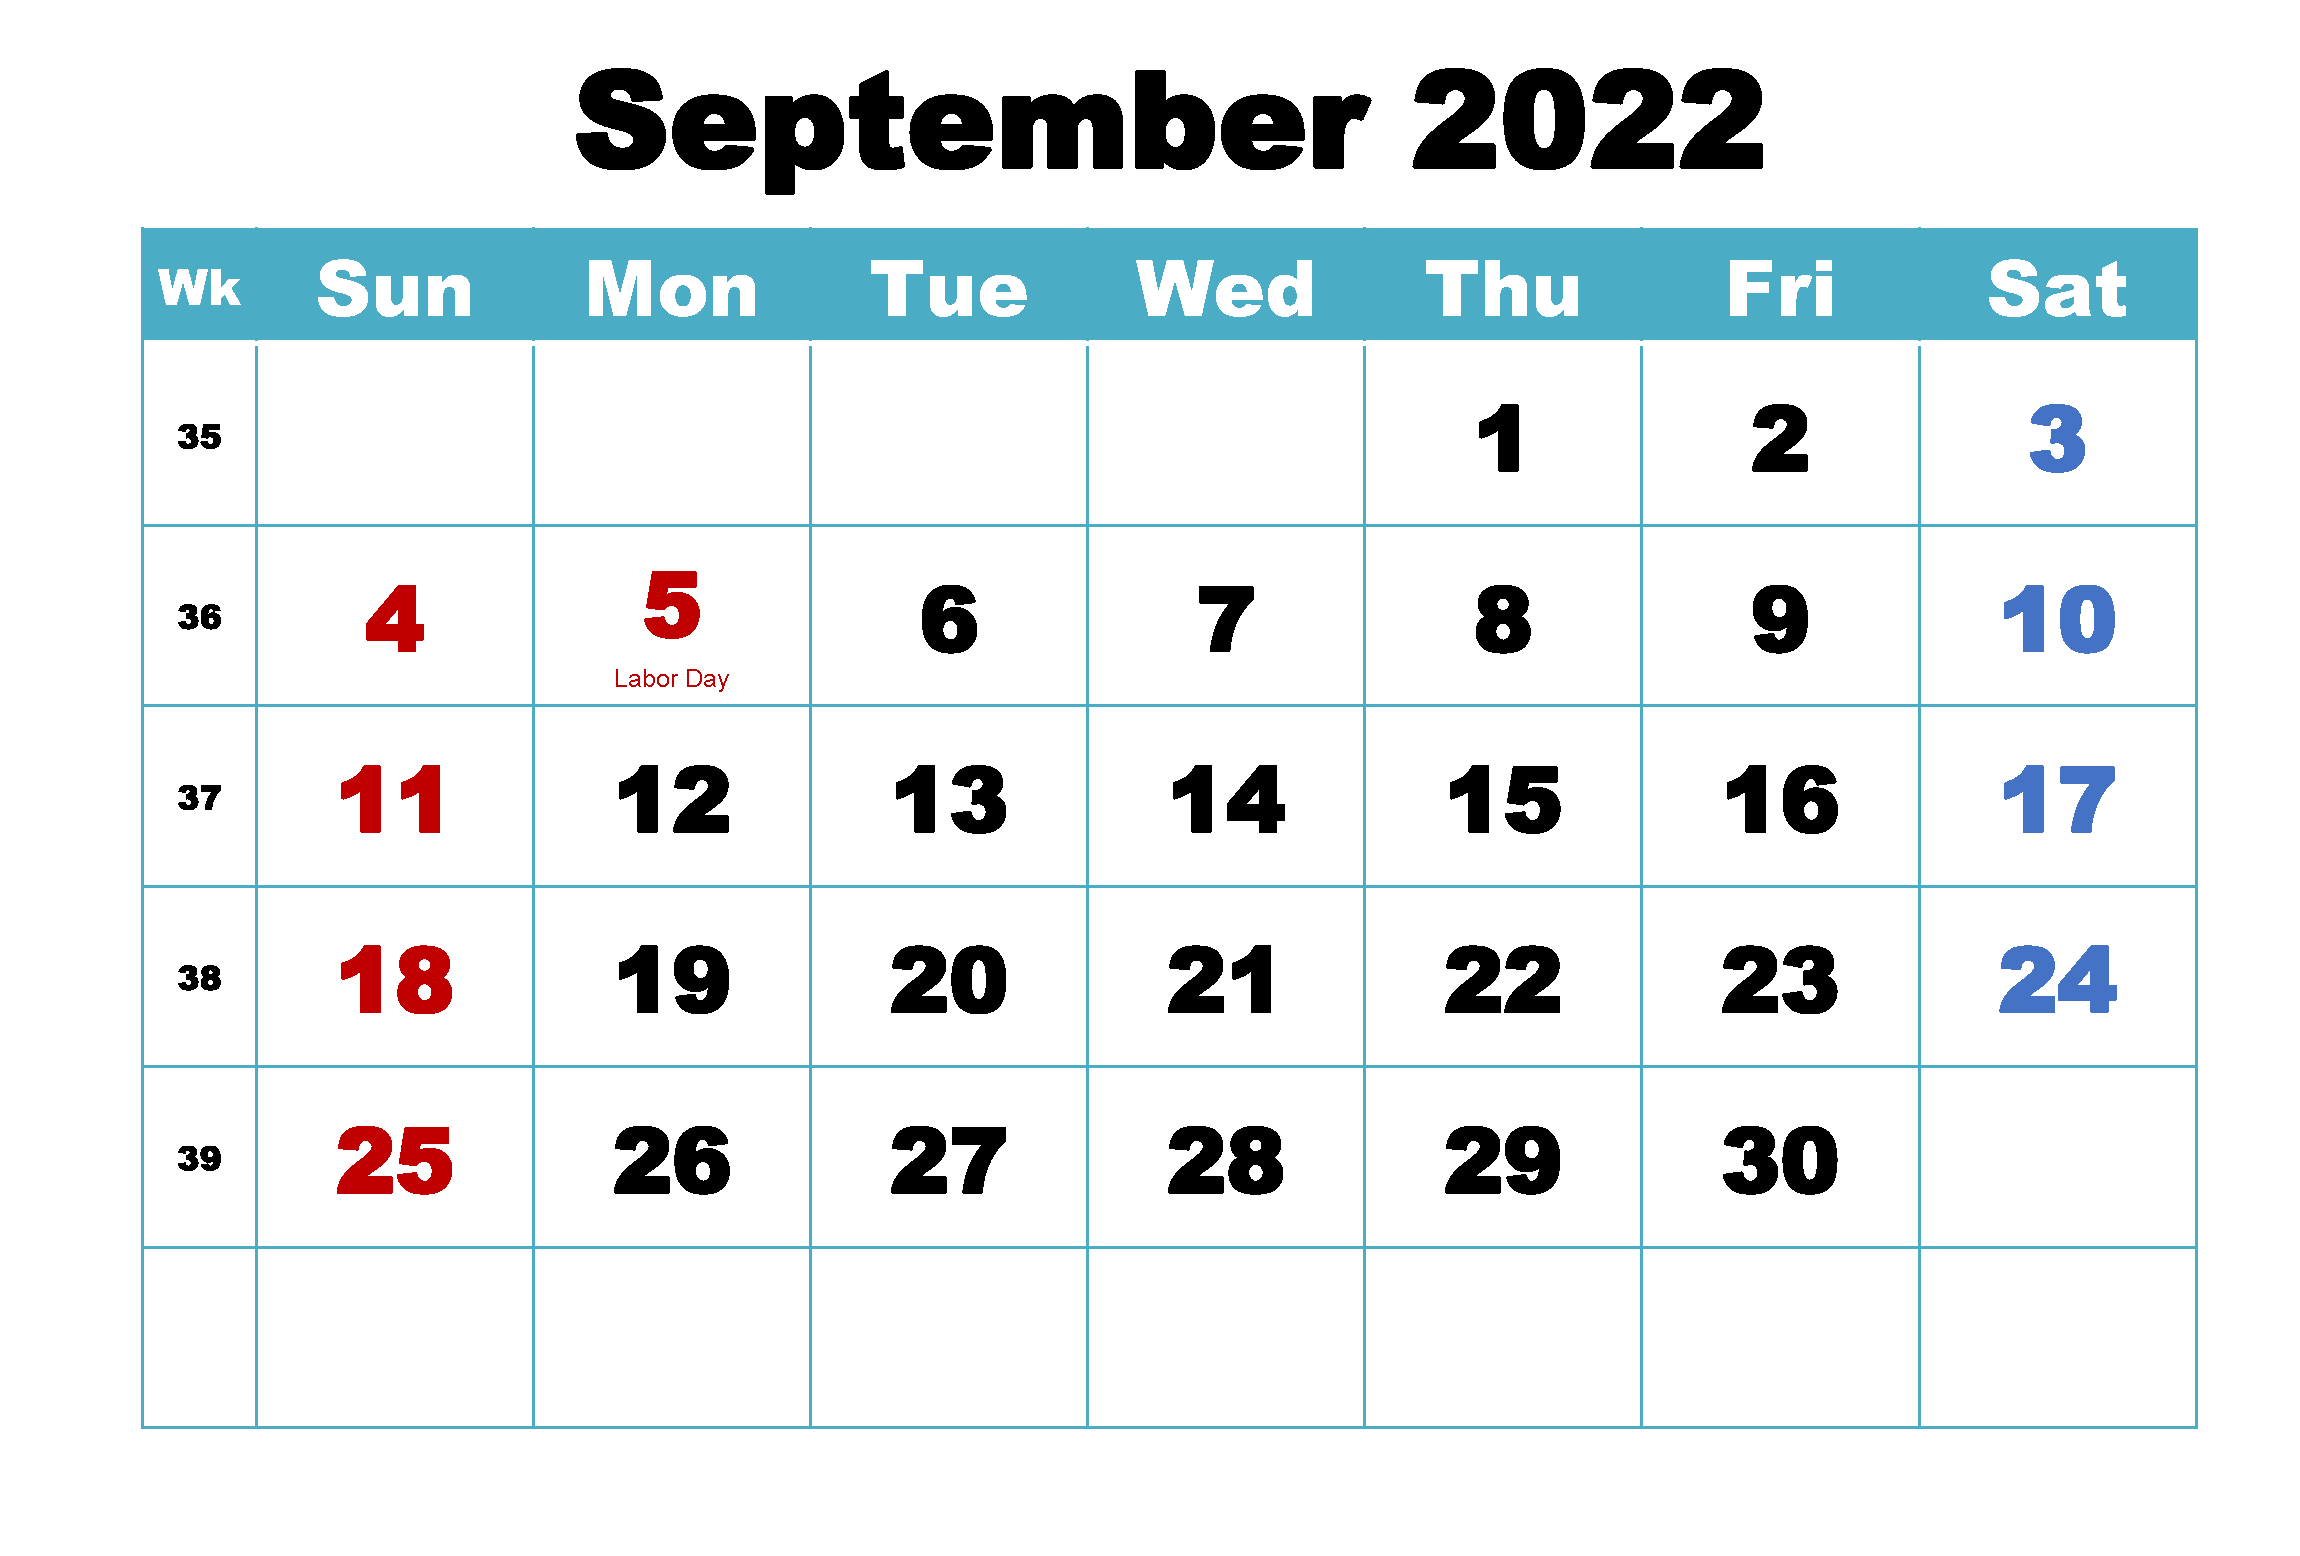 September 2022 Calendar With Holidays